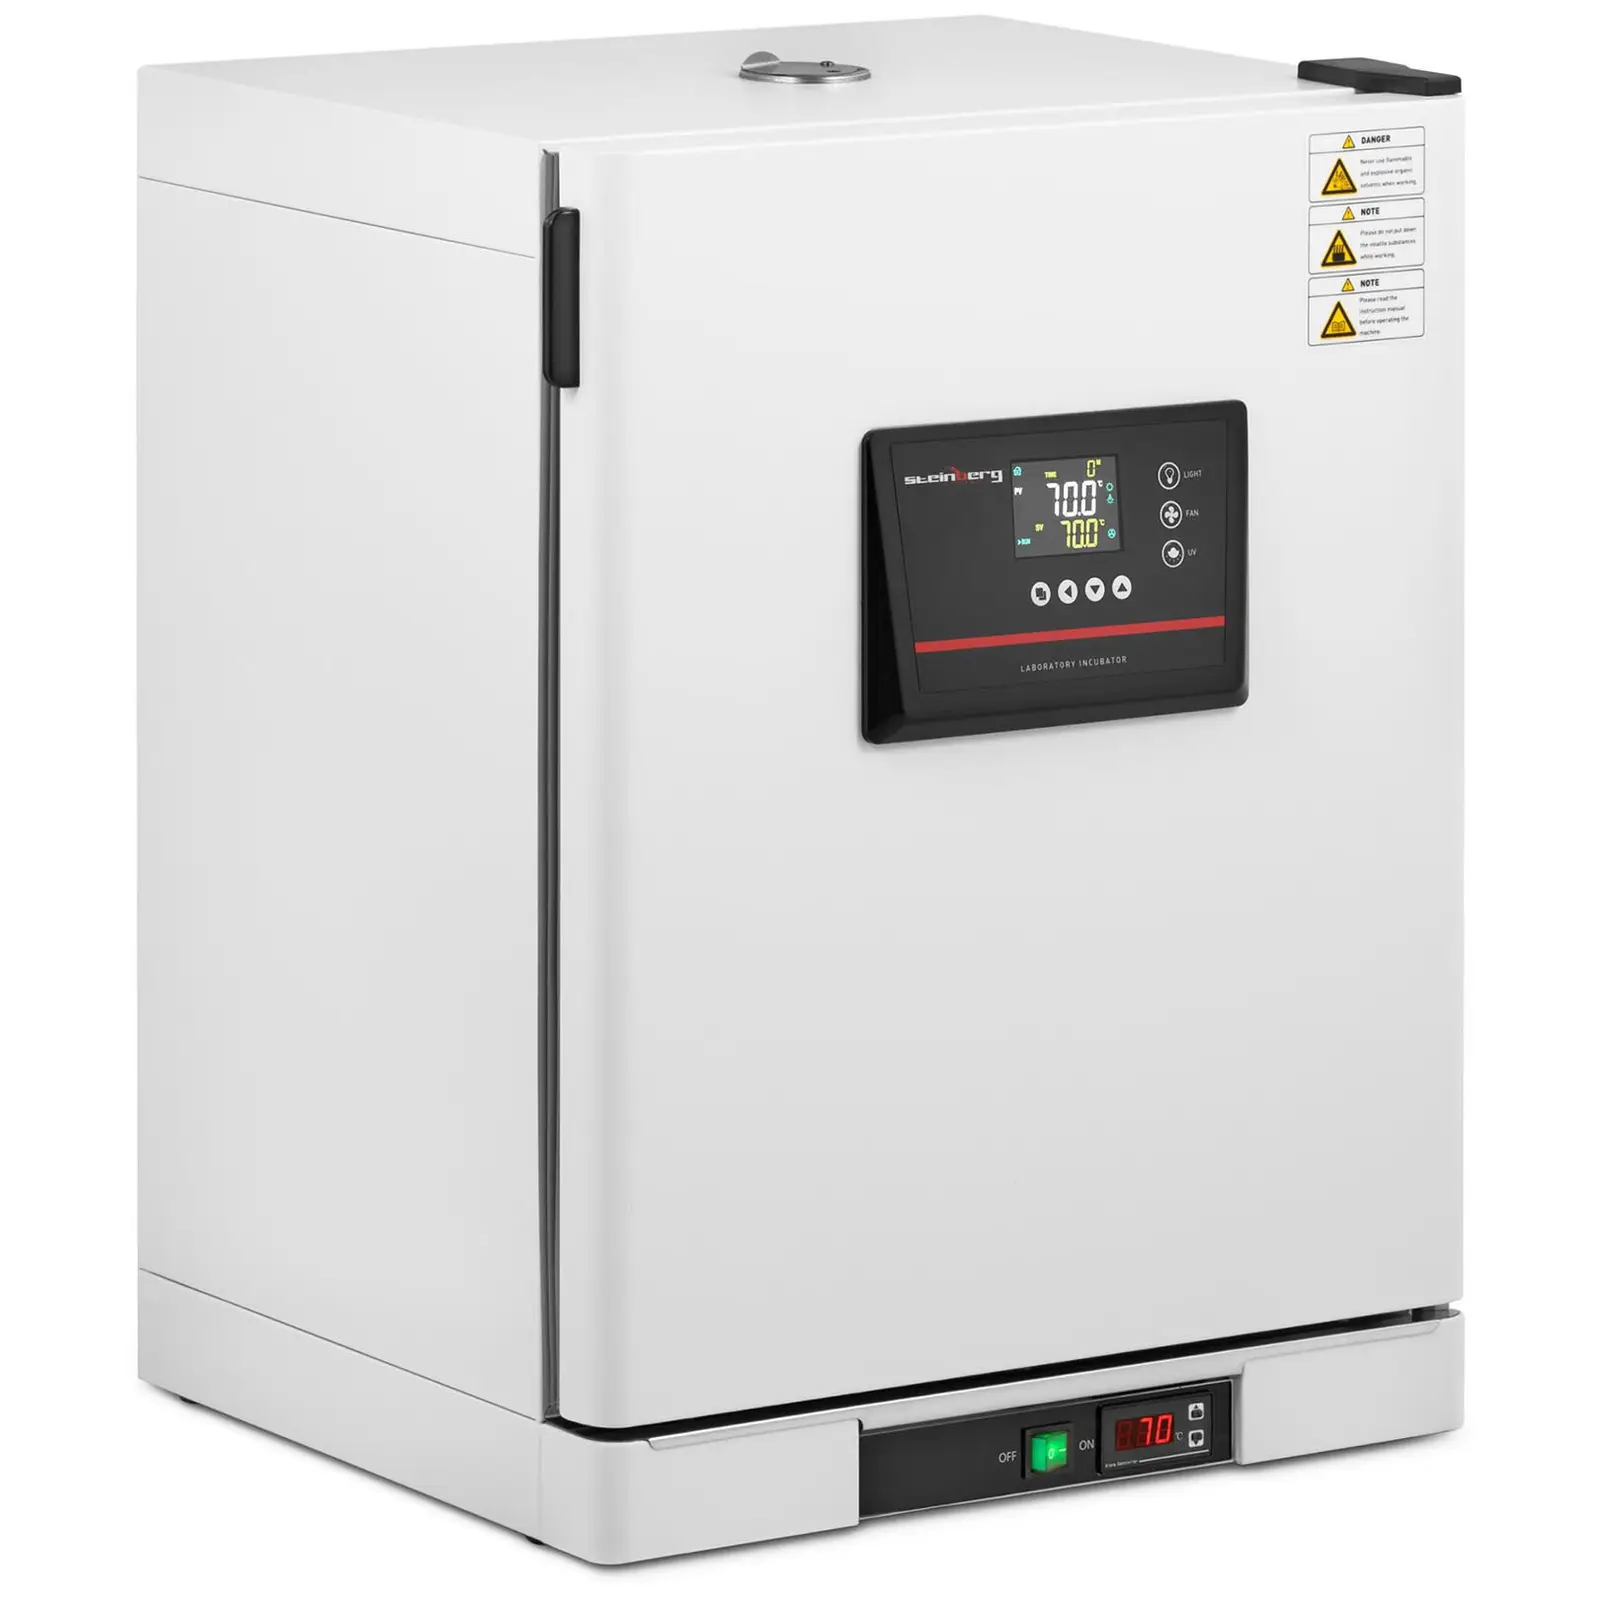 Laboratórny inkubátor - do 70 °C - 65 l - cirkulujúci vzduch